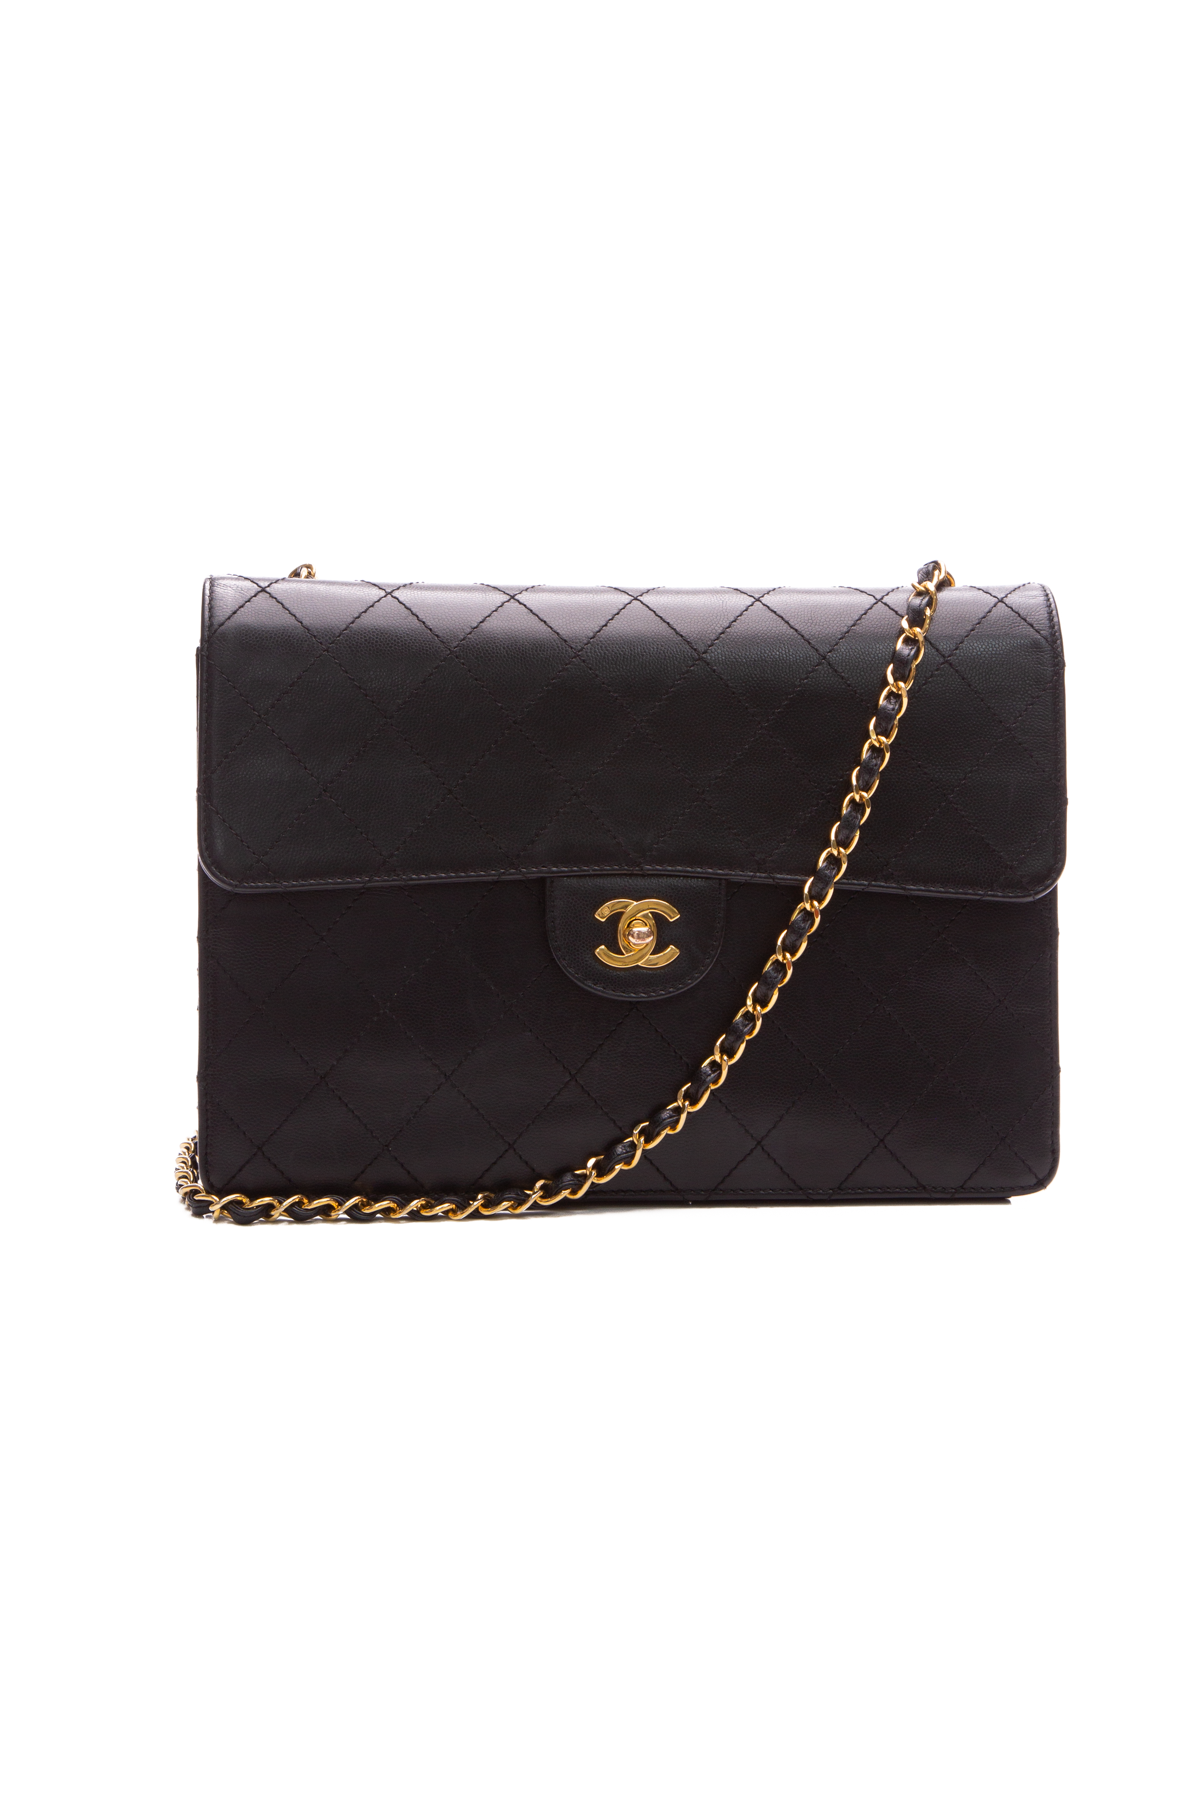 Chanel Vintage Single Flap Bag - Couture USA